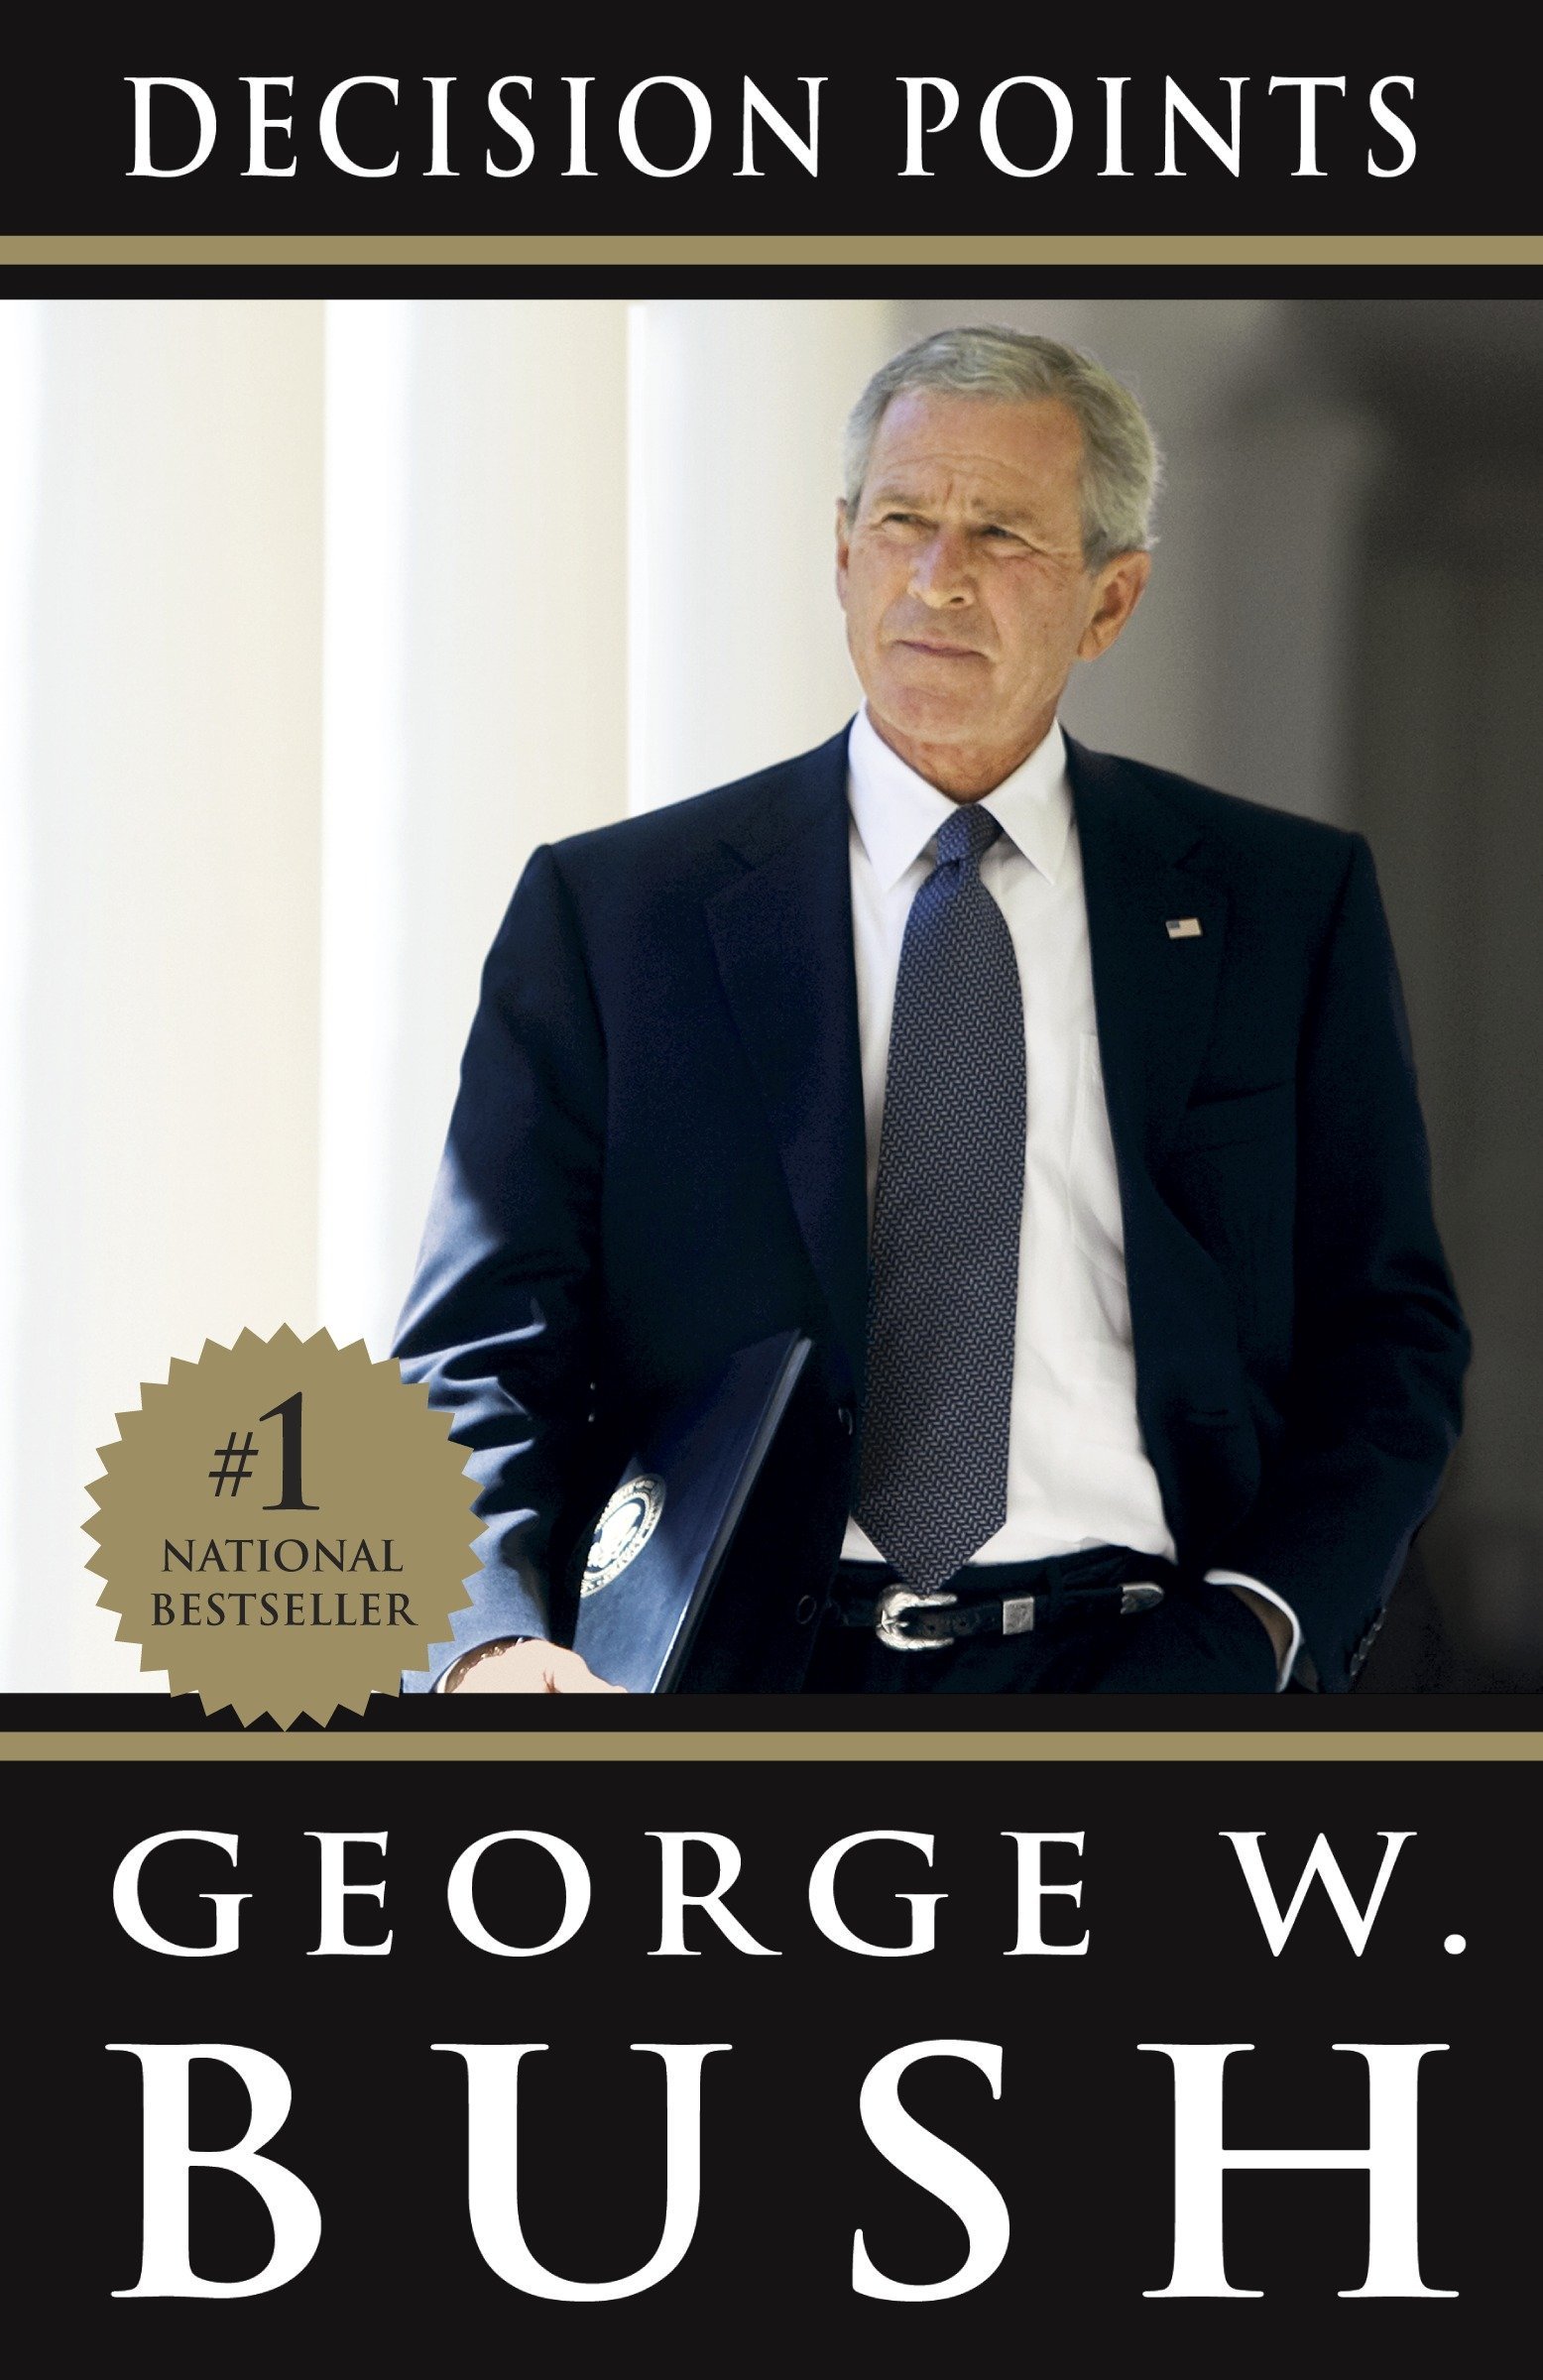 Decision Points by George W. Bush.jpg